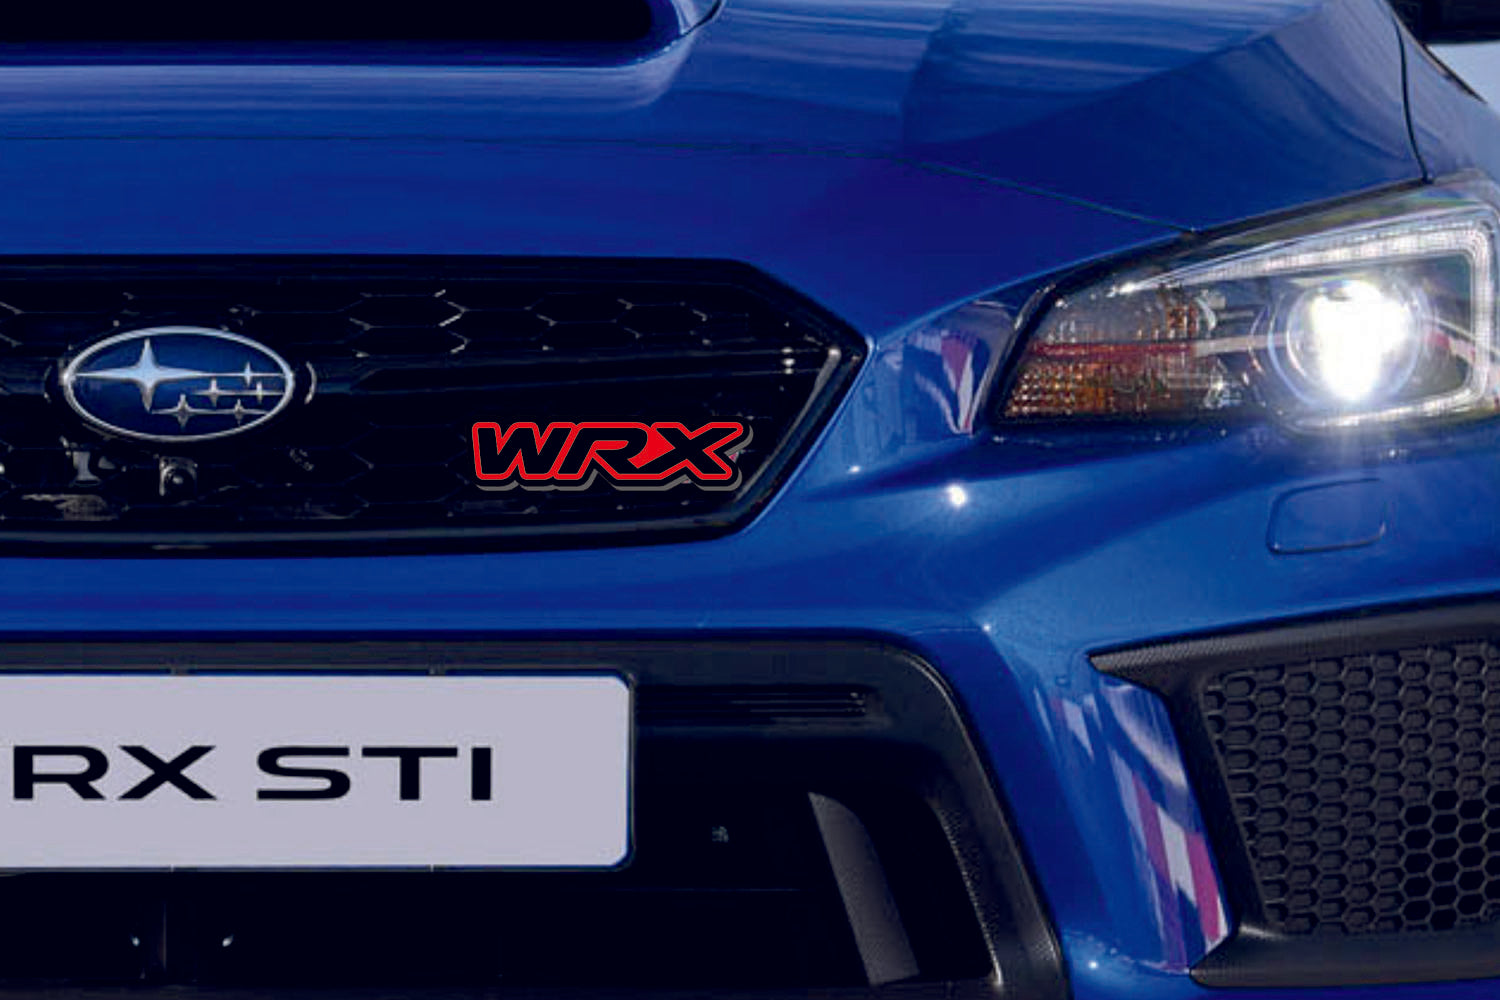 Subaru Radiator grille emblem with WRX logo (type 3) - decoinfabric